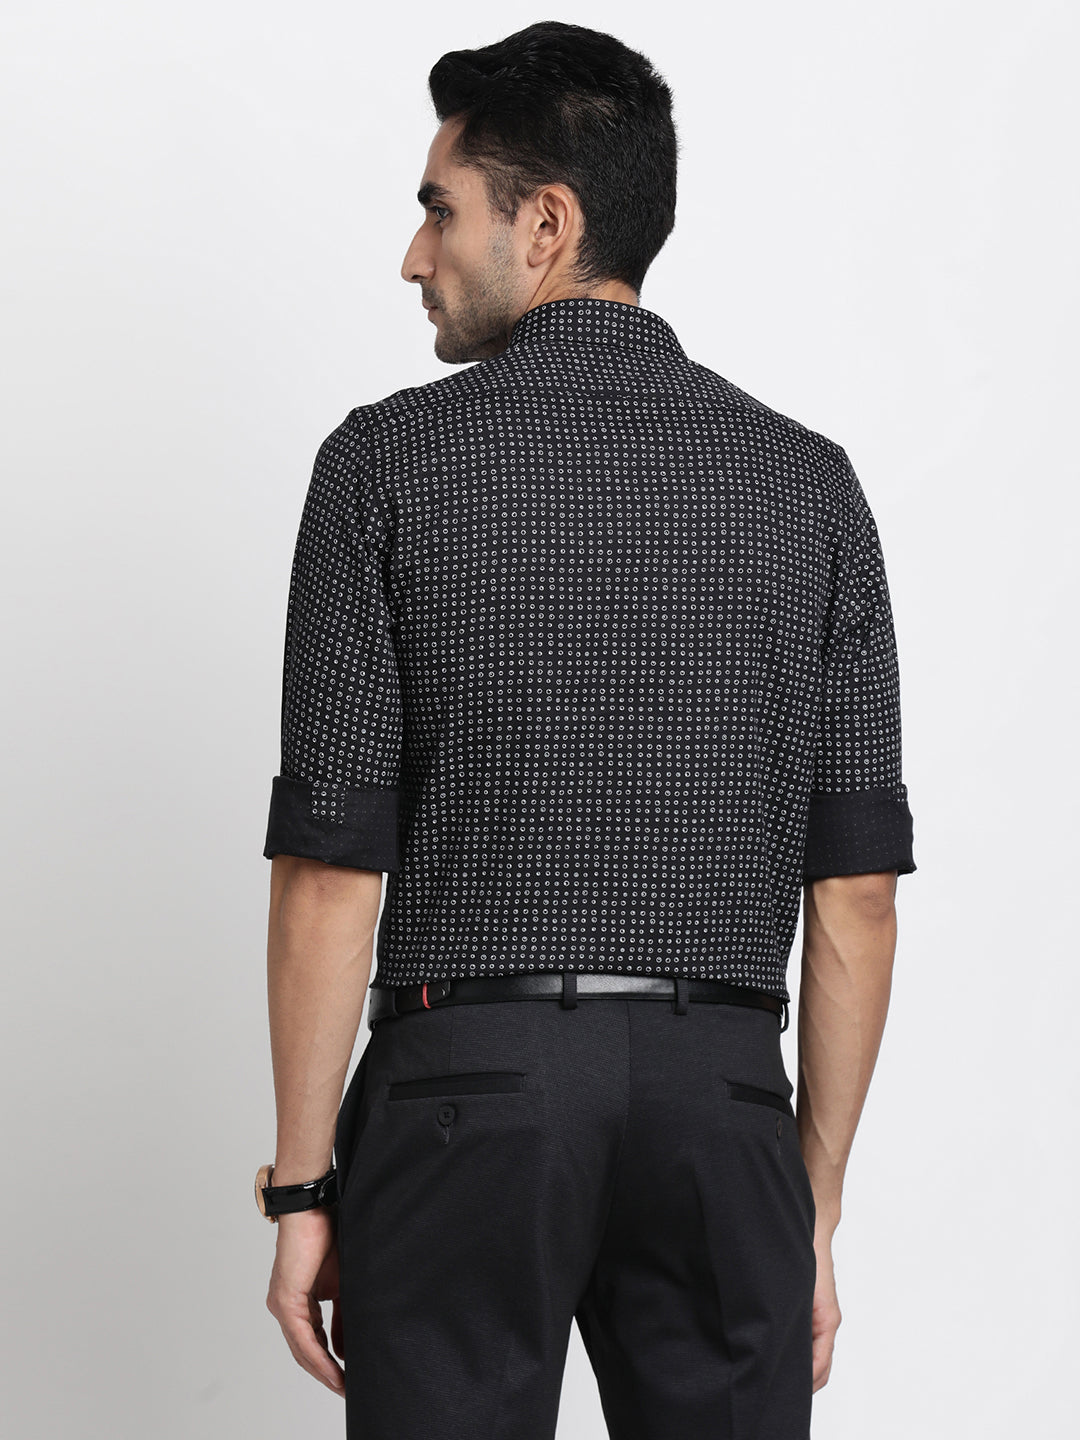 Cotton Tencel Black Printed Slim Fit Full Sleeve Formal Shirt